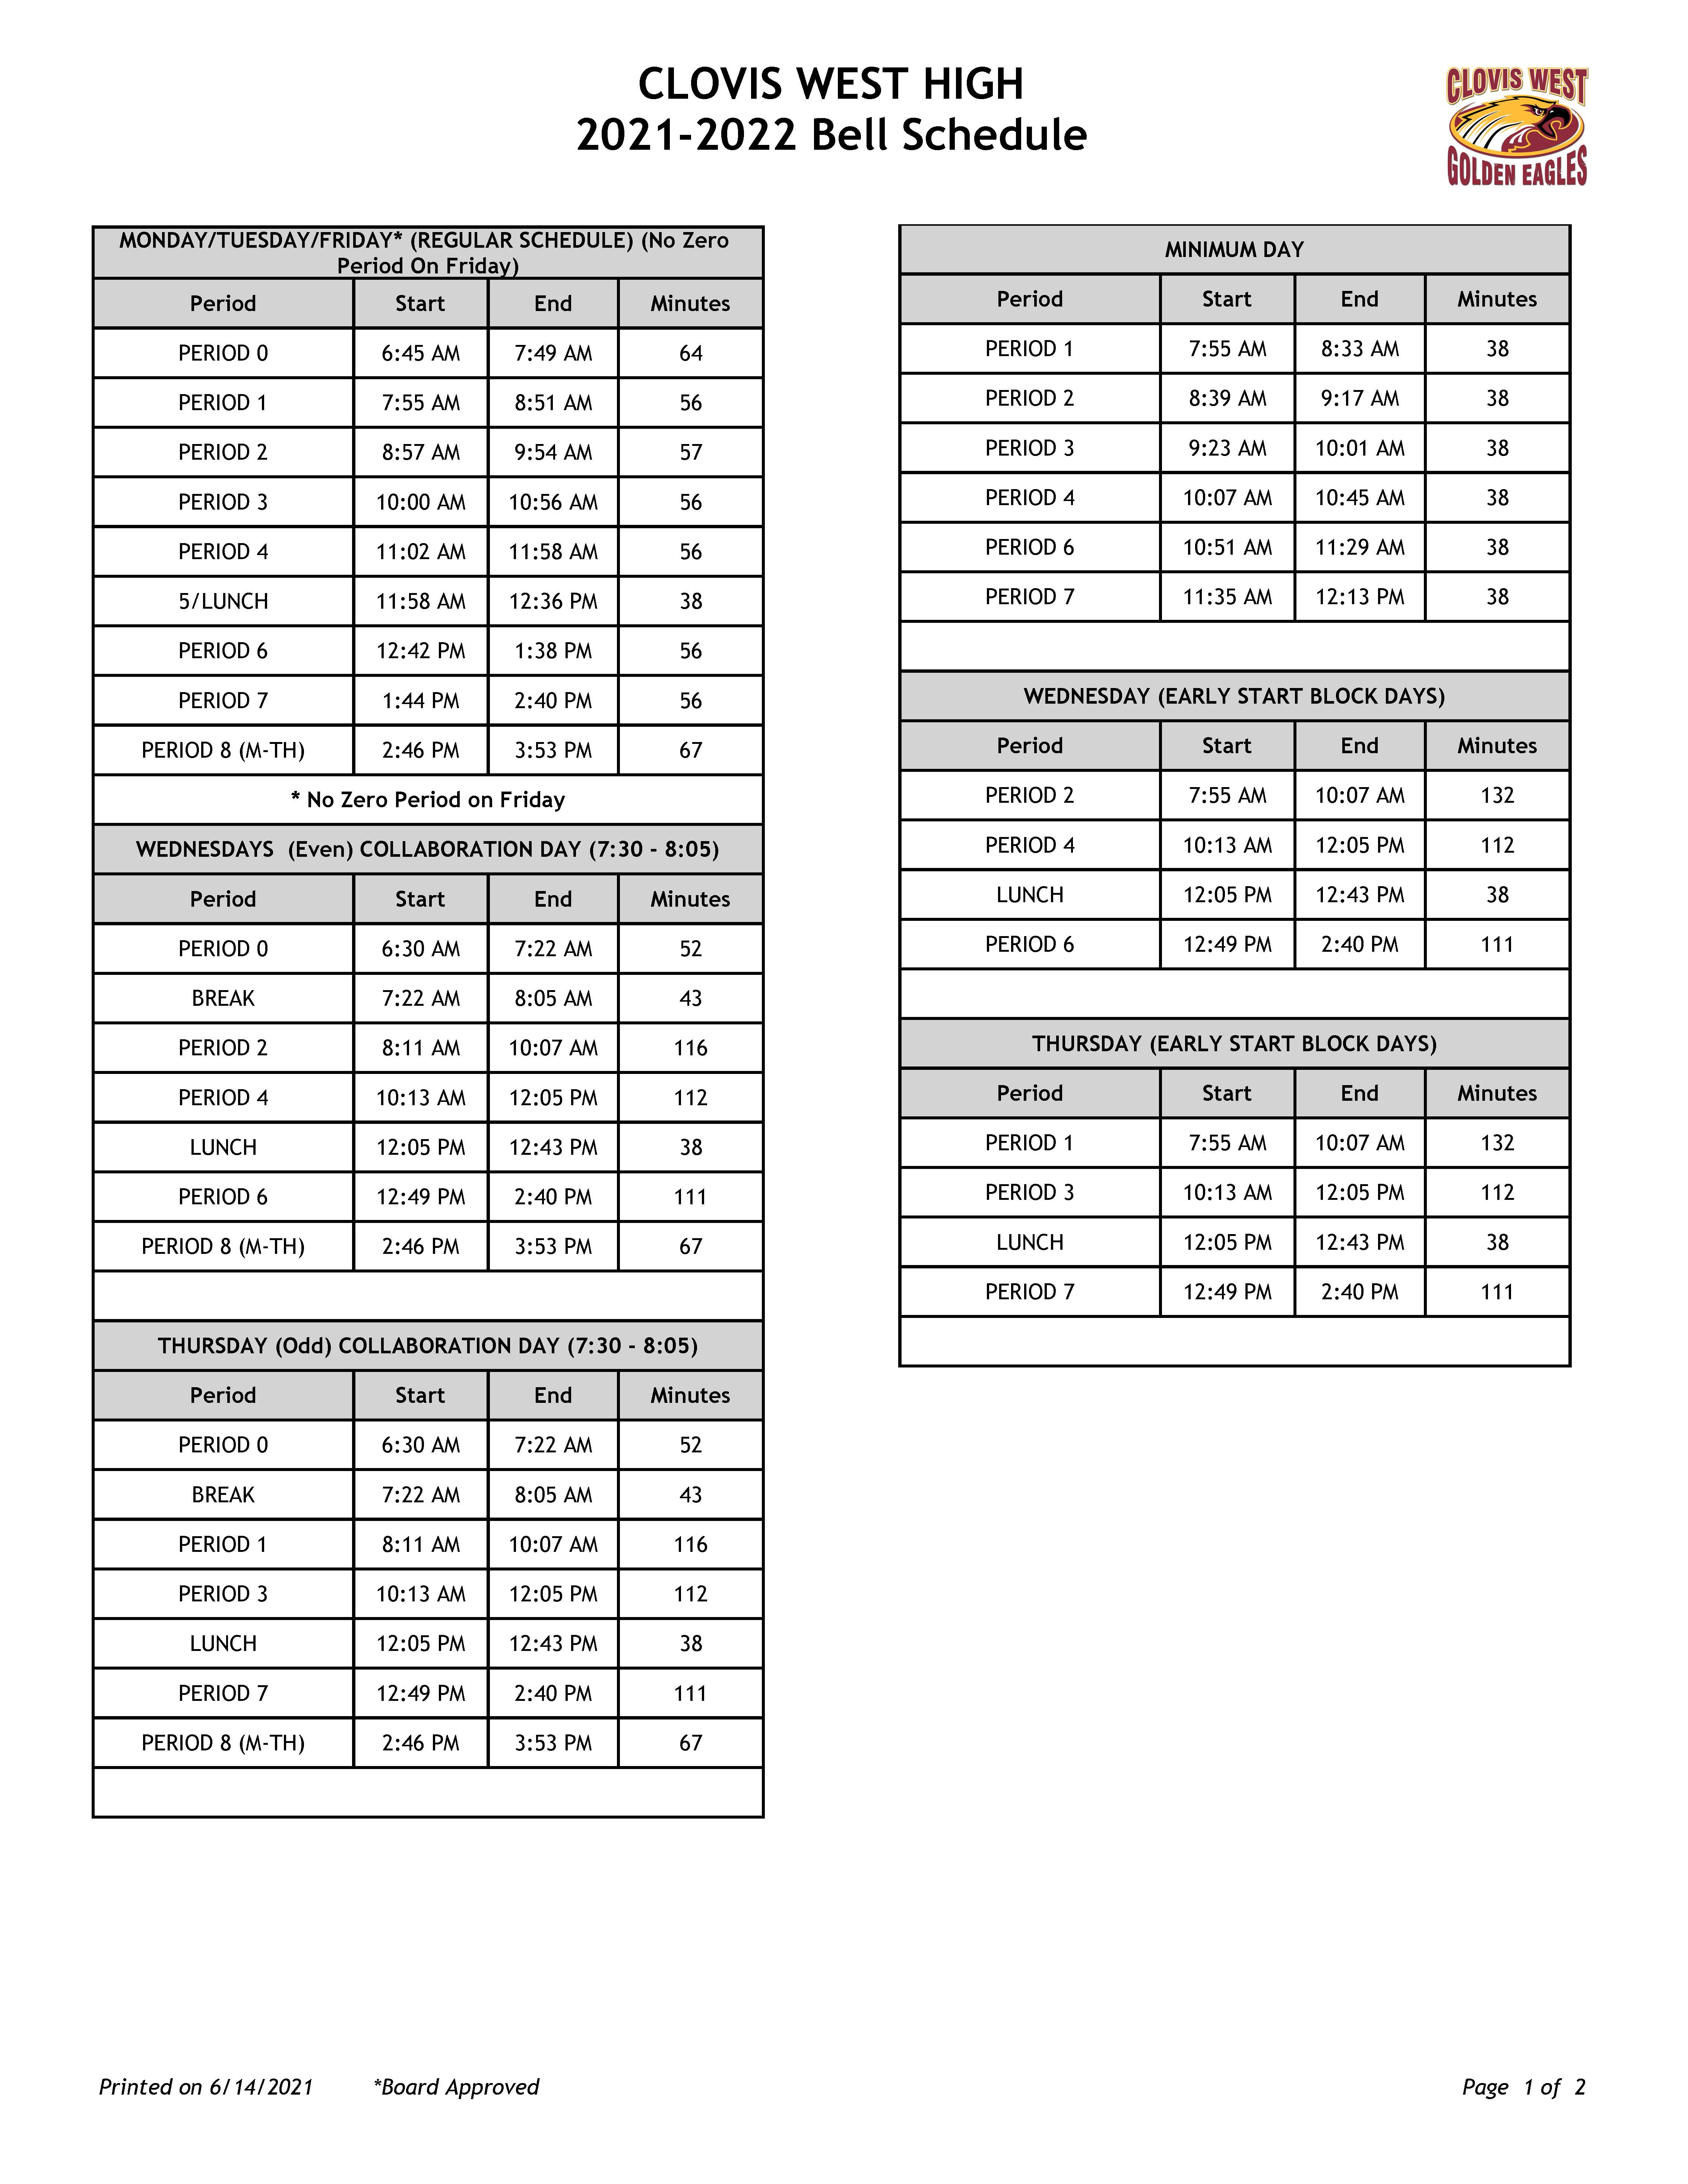 Bell Schedule 21-22